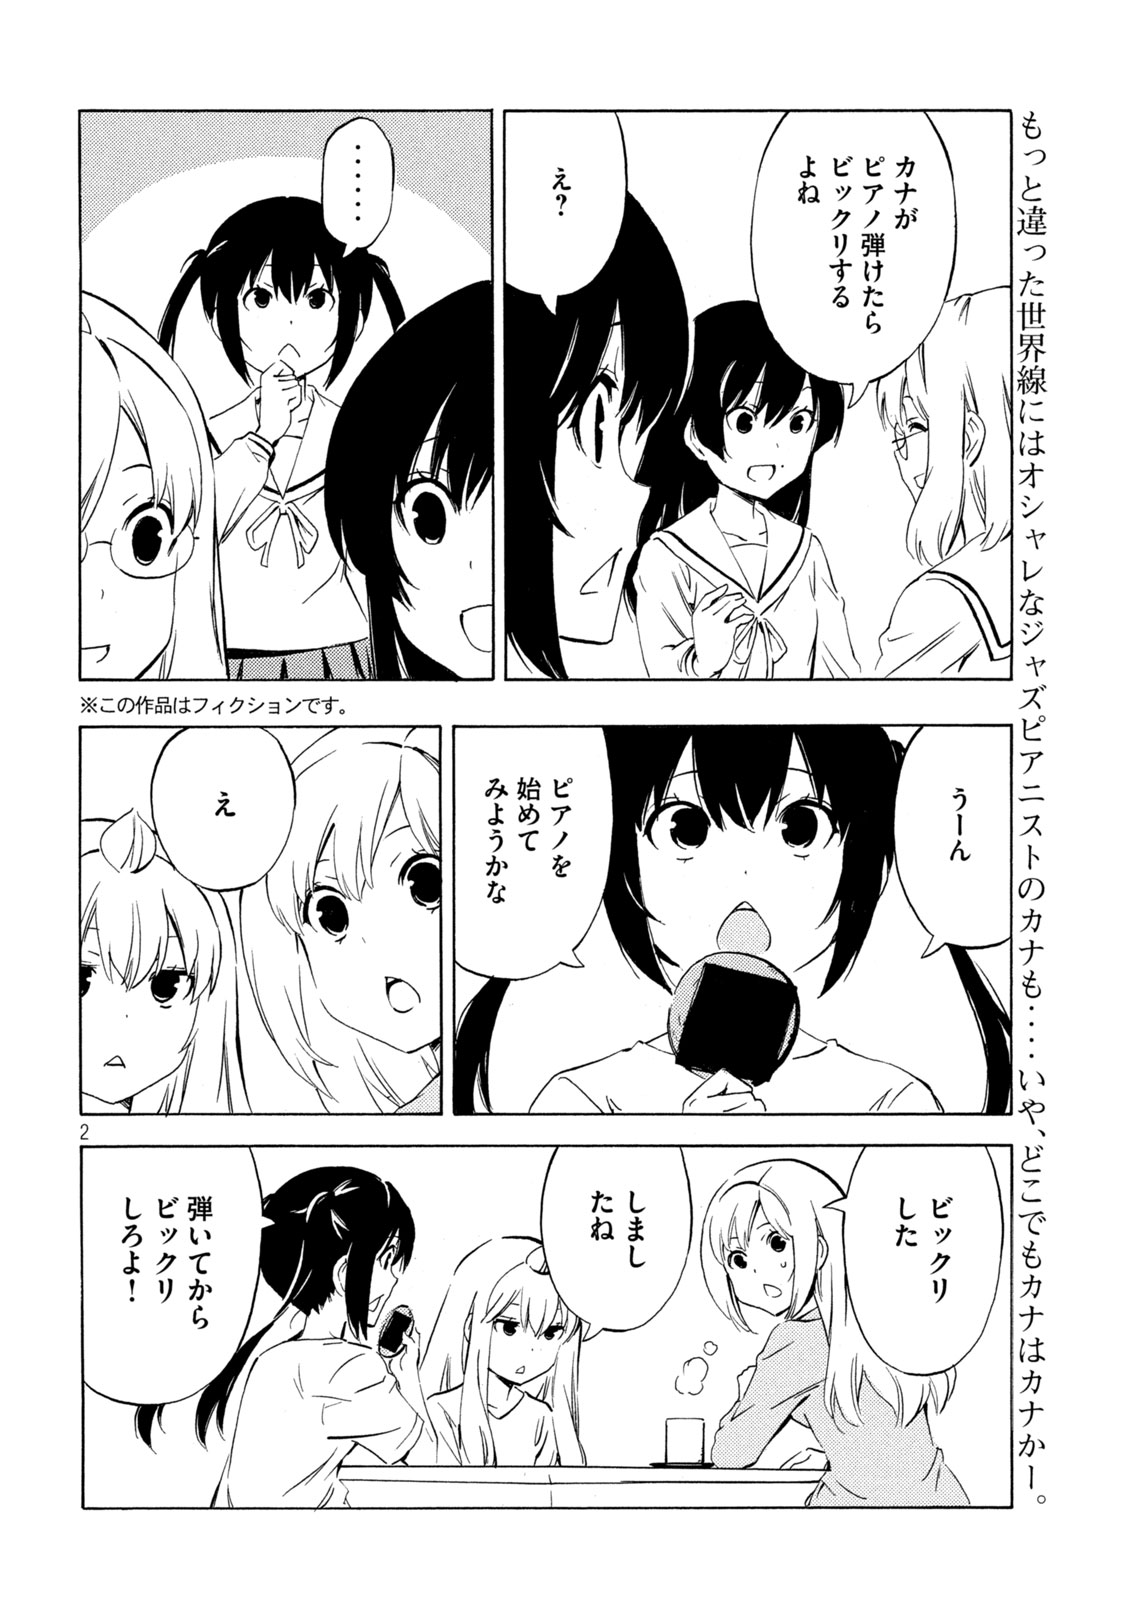 Minami-ke - Chapter 483 - Page 2